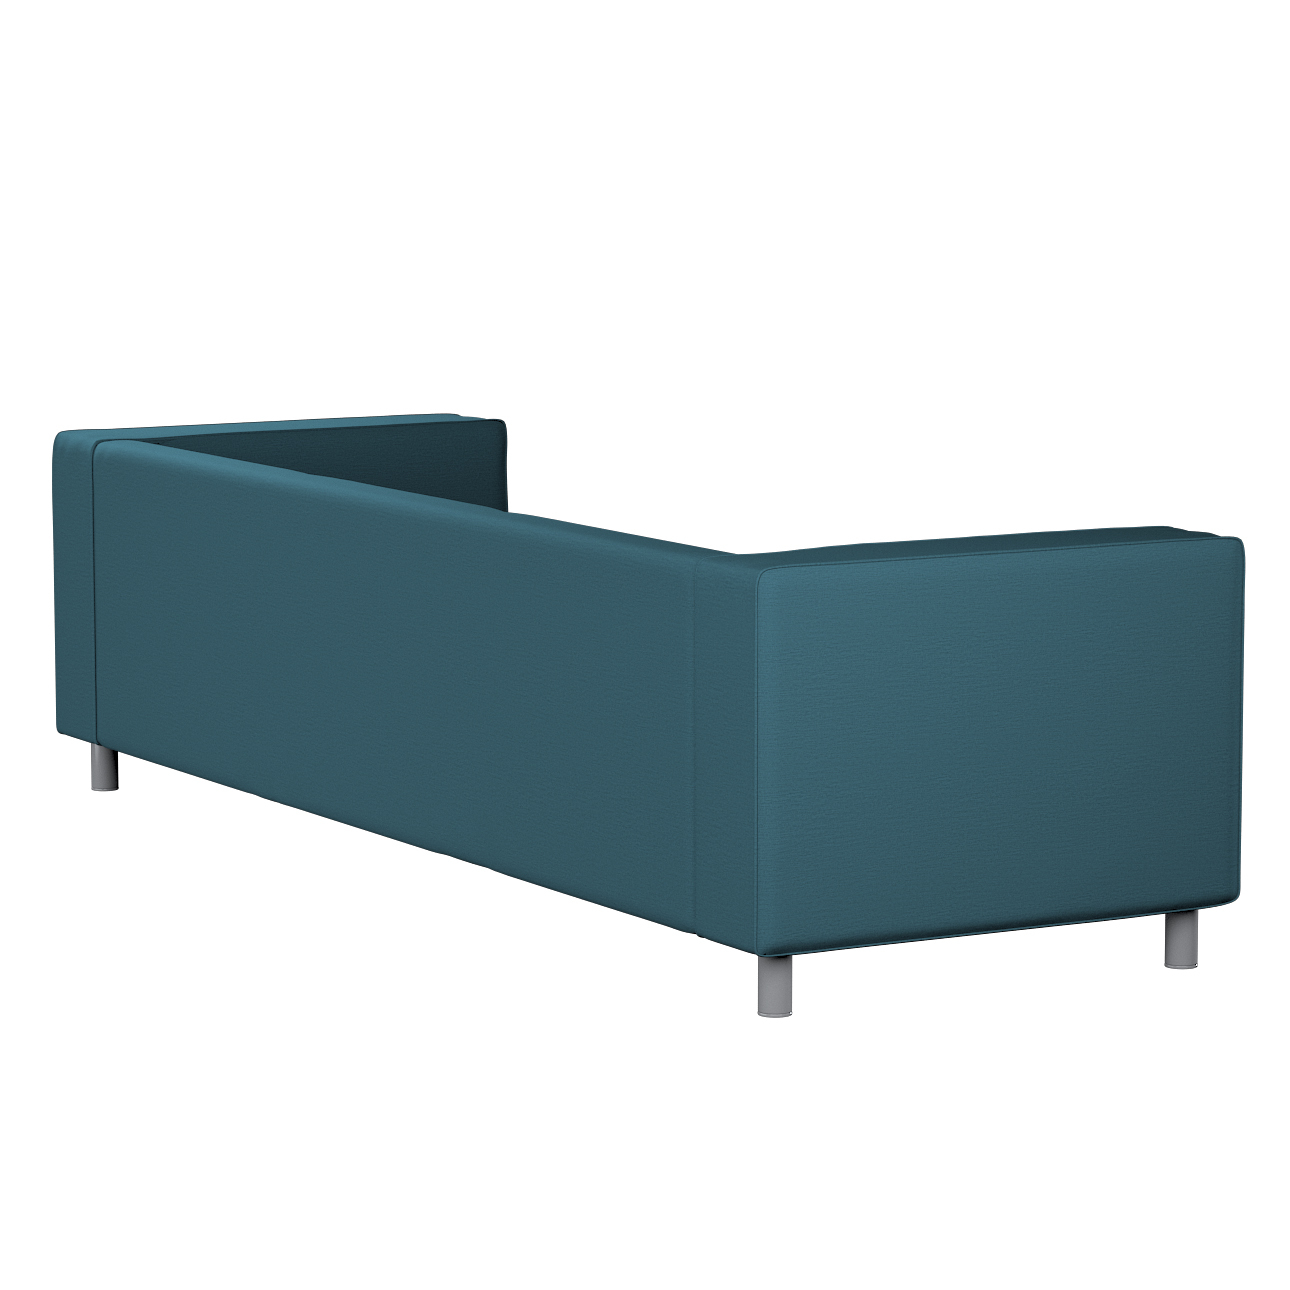 Bezug für Klippan 4-Sitzer Sofa, dunkelblau, Bezug für Klippan 4-Sitzer, Li günstig online kaufen